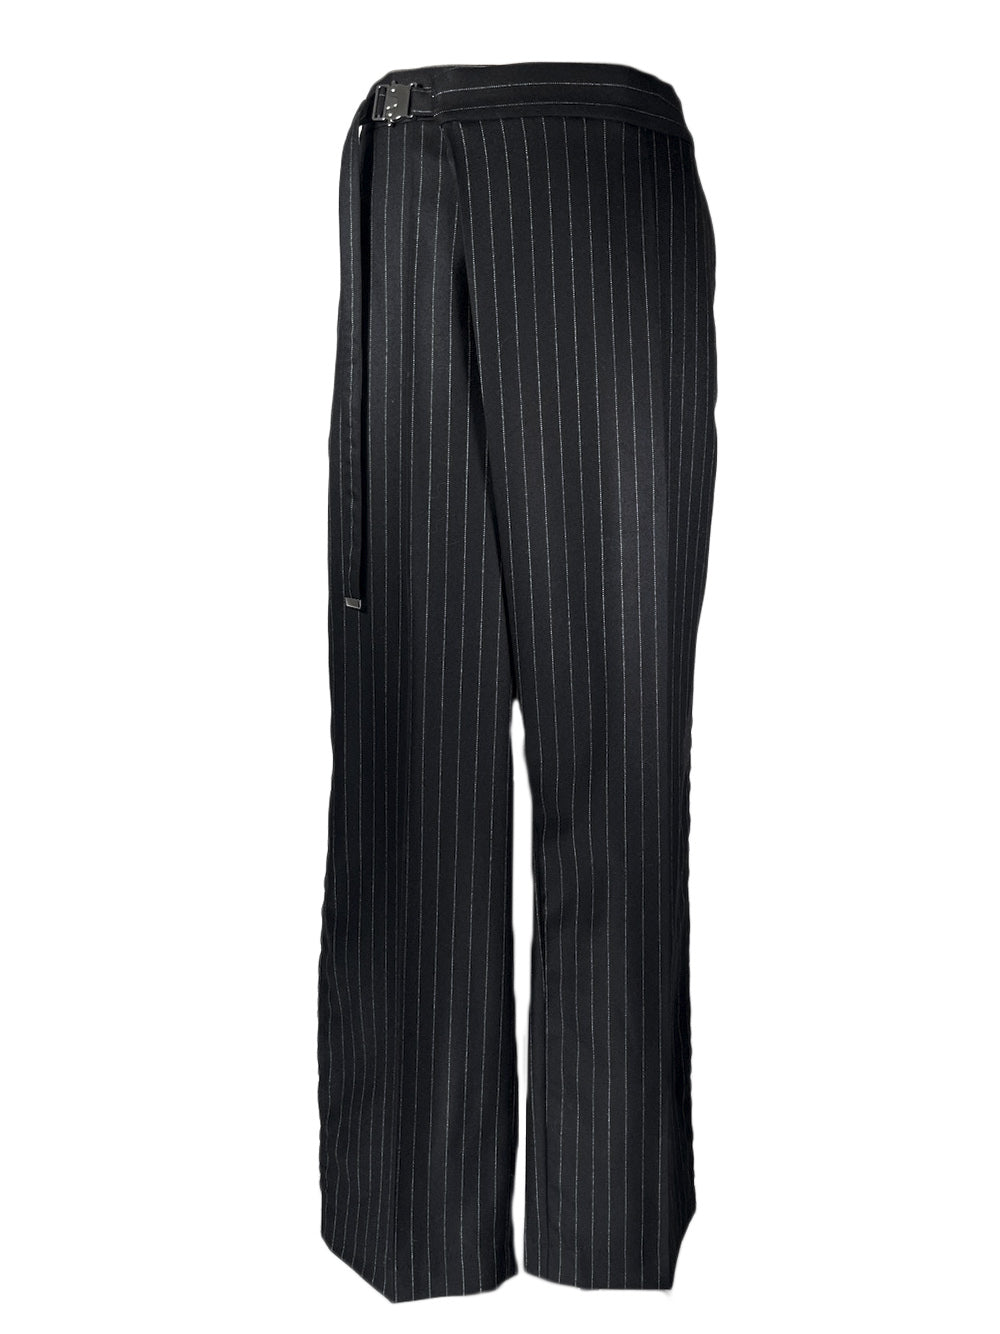 LB23AW-PT04-GST | 条纹羊毛哔叽边线裹身长裤 | 黑色条纹